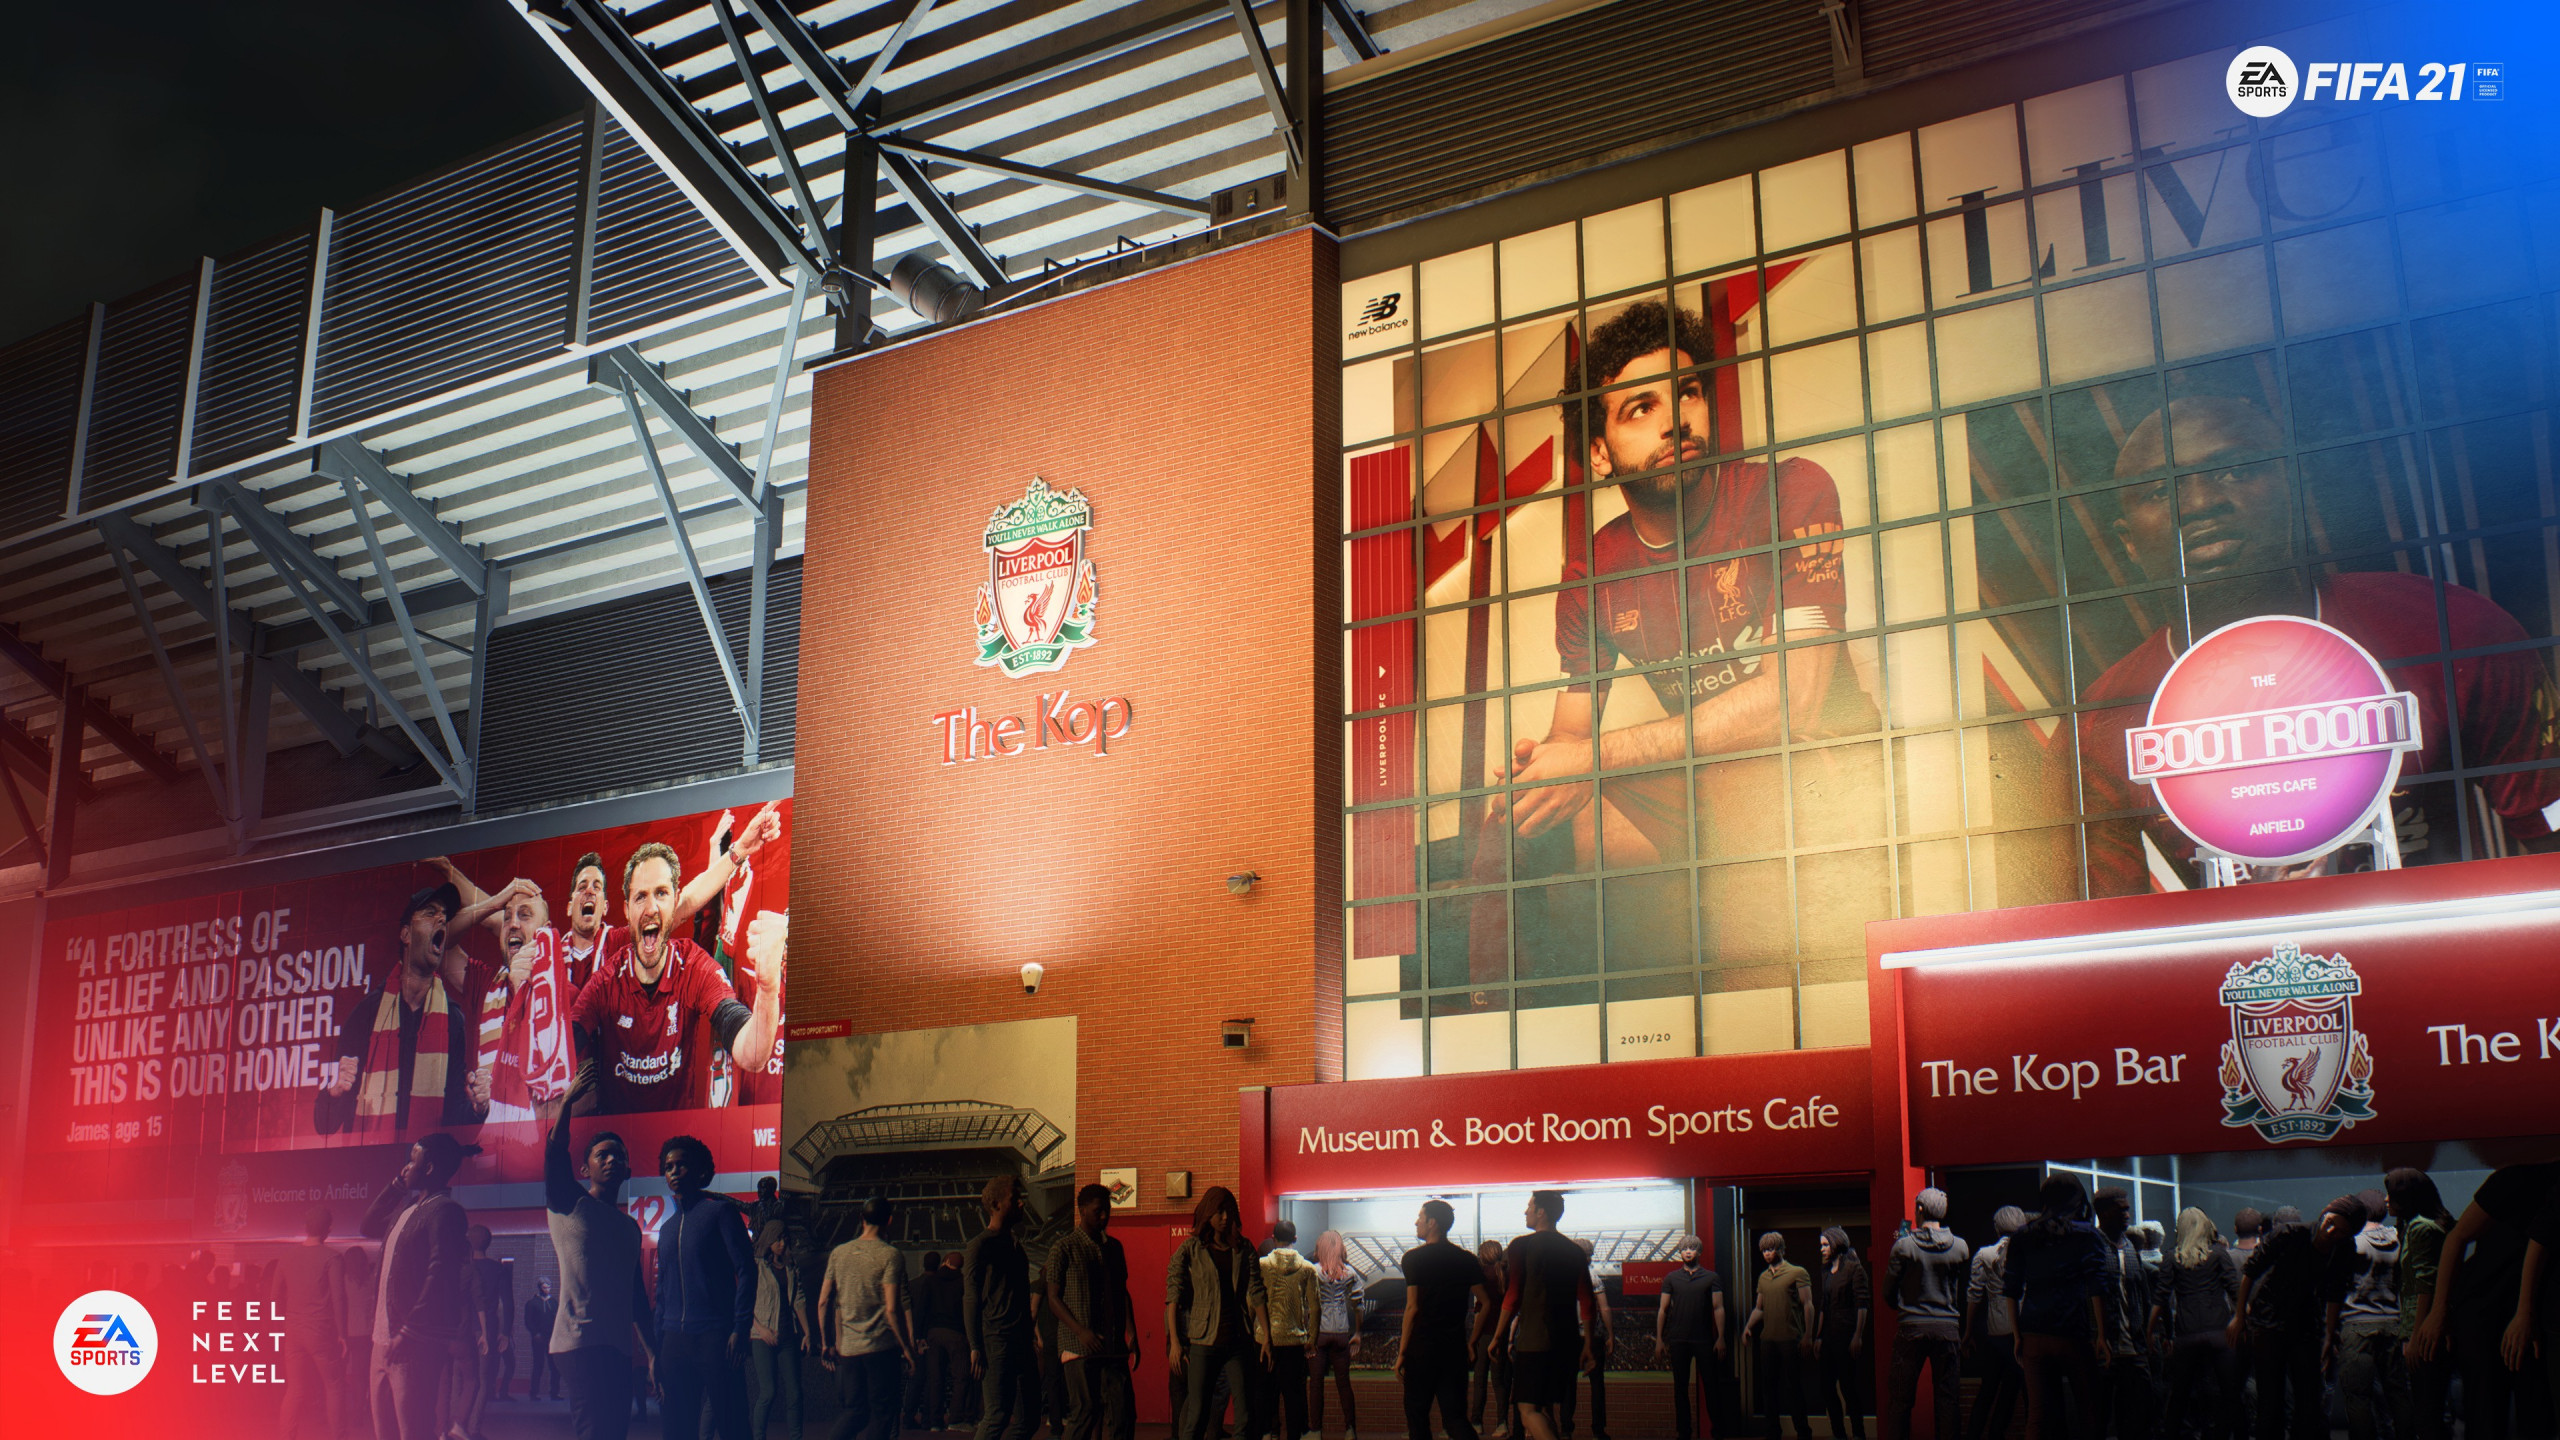 Download wallpaper: FIFA 21 Liverpool Stadium 2560x1440